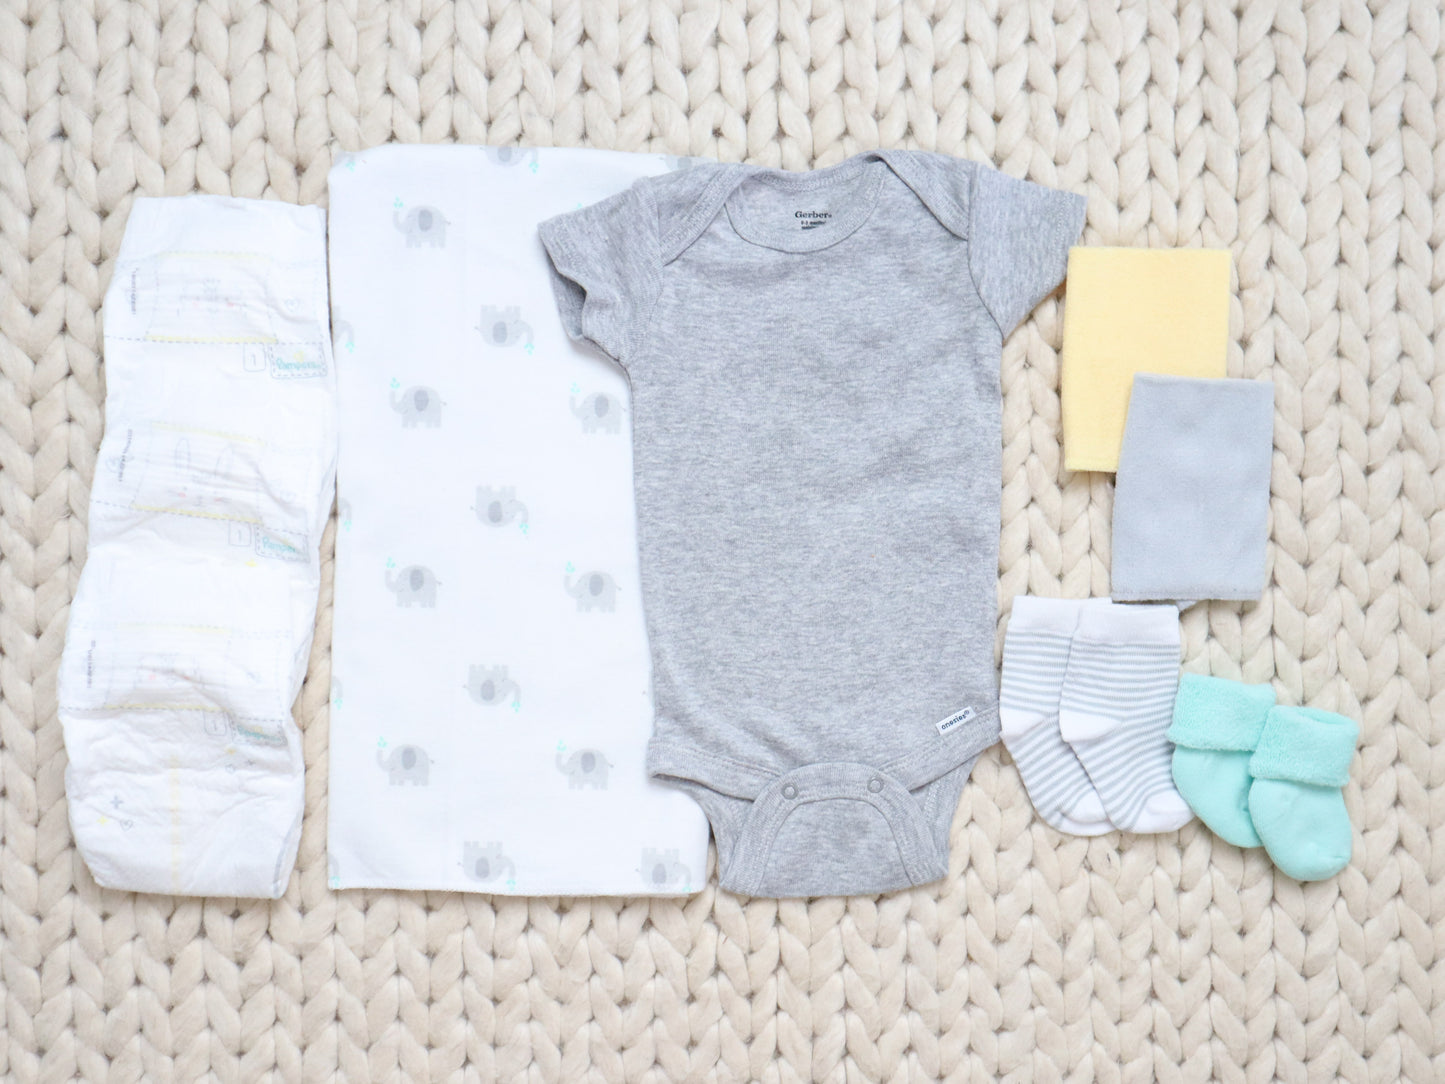 neutral elephant baby gift contents onesie blanket washcloth socks diaper